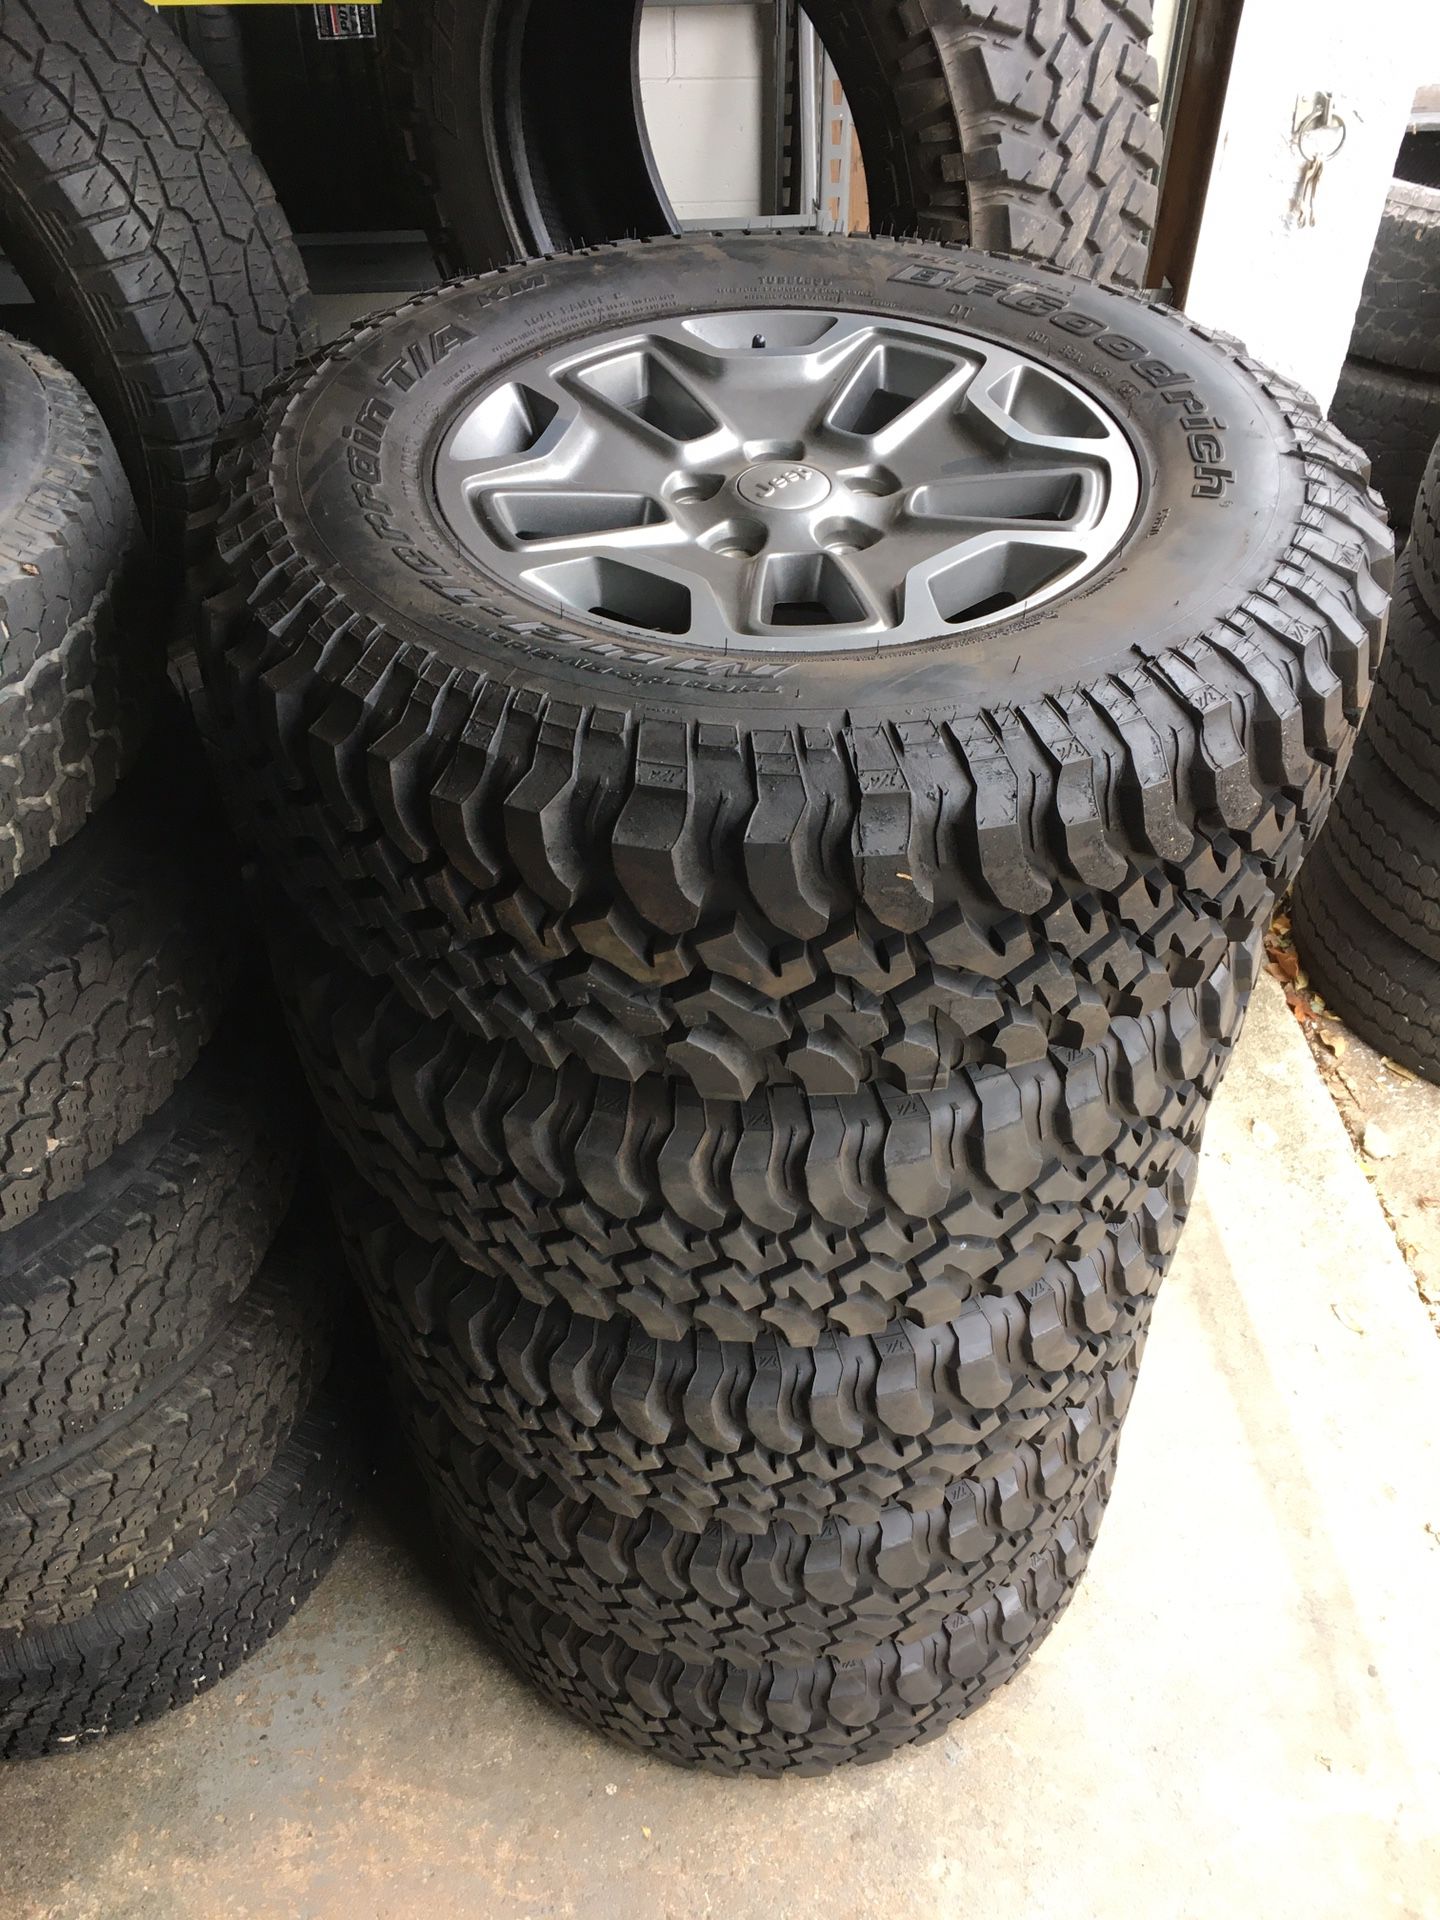 5) 255/75/17 BFGoodrich Mud Terrain KM Tires, with Jeep Rubicon wheels.